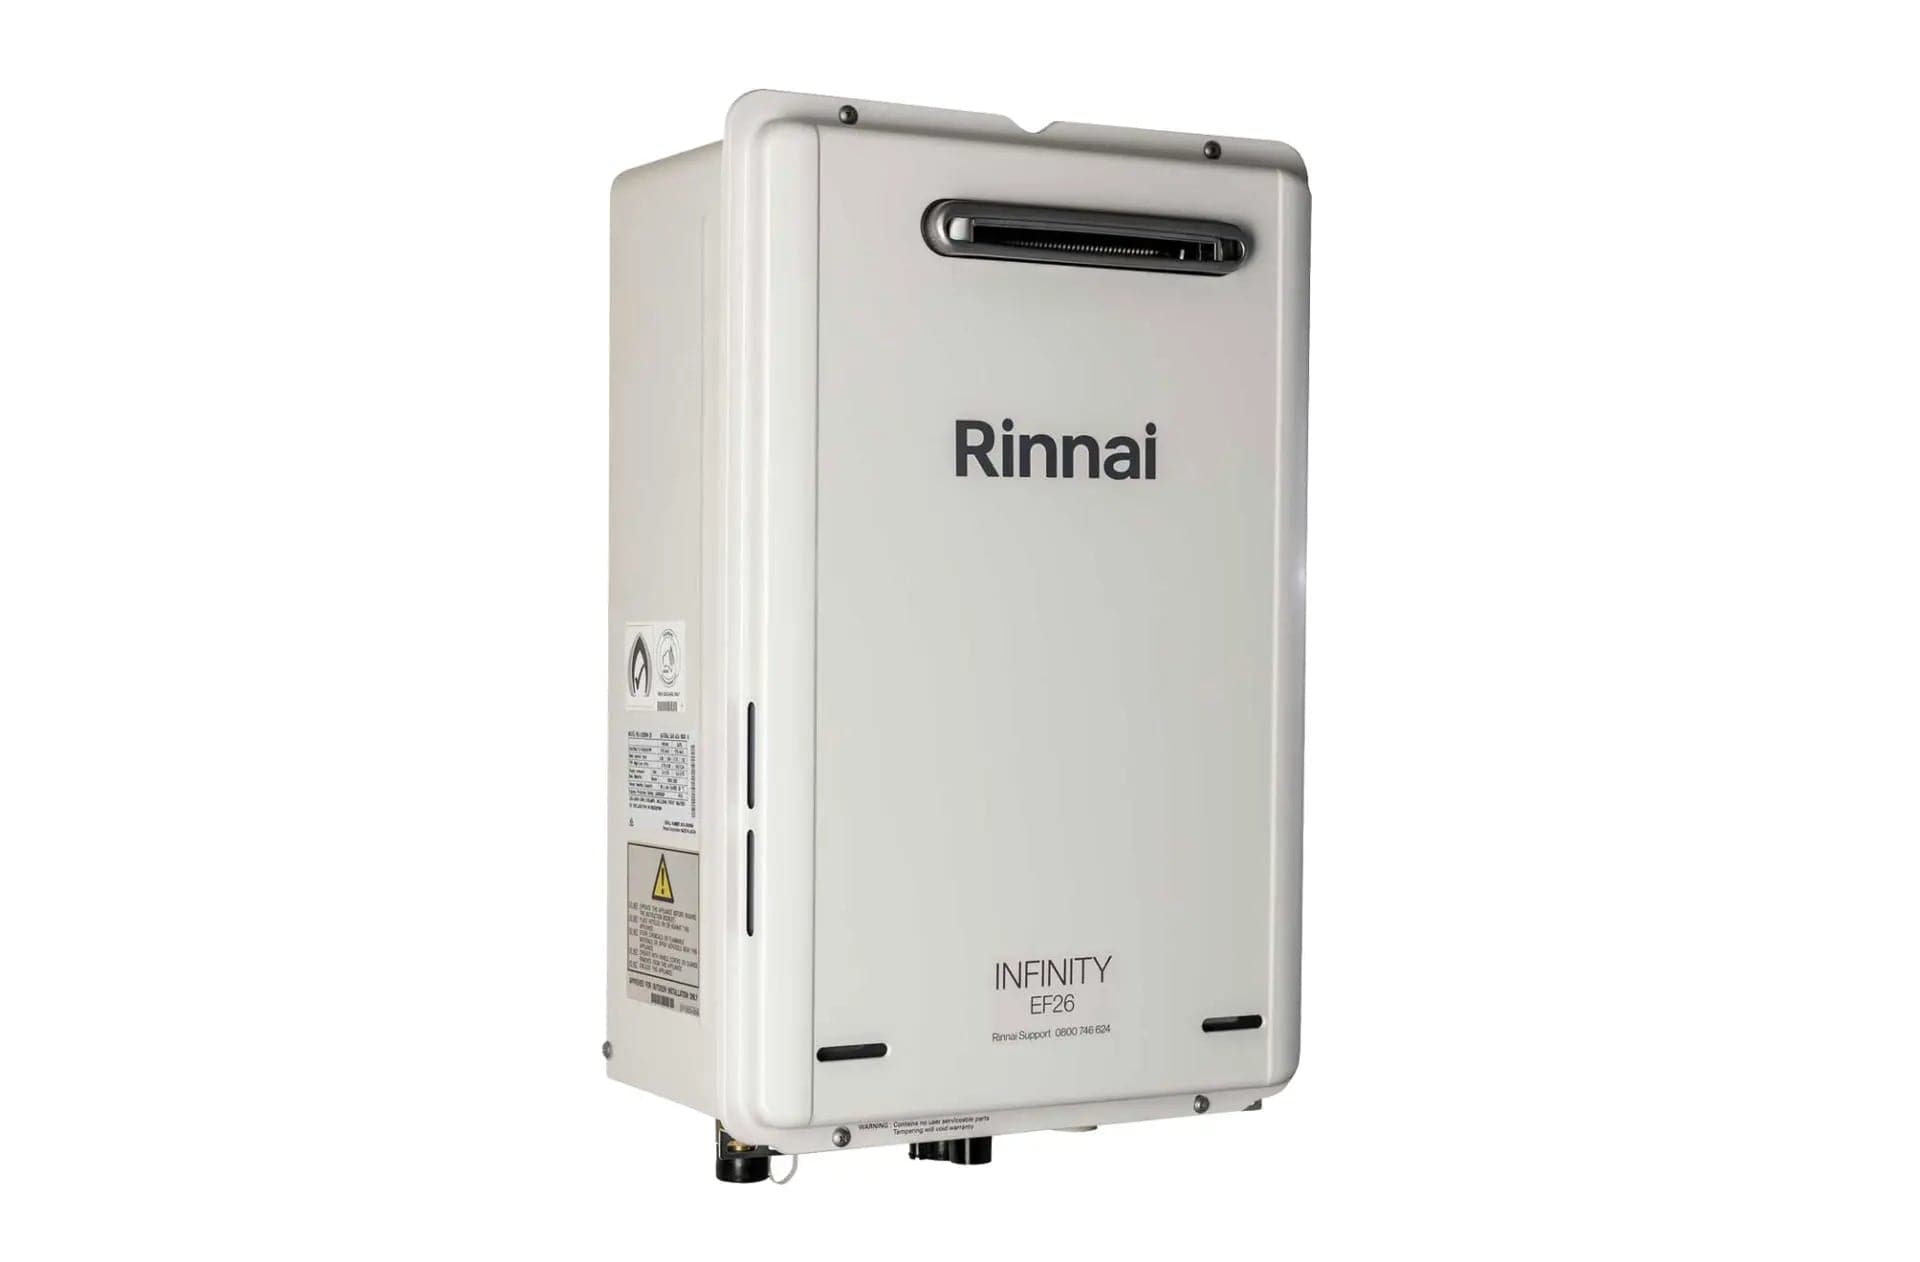 Rinnai Infinity EF26 External Residential Gas Hot Water Heater